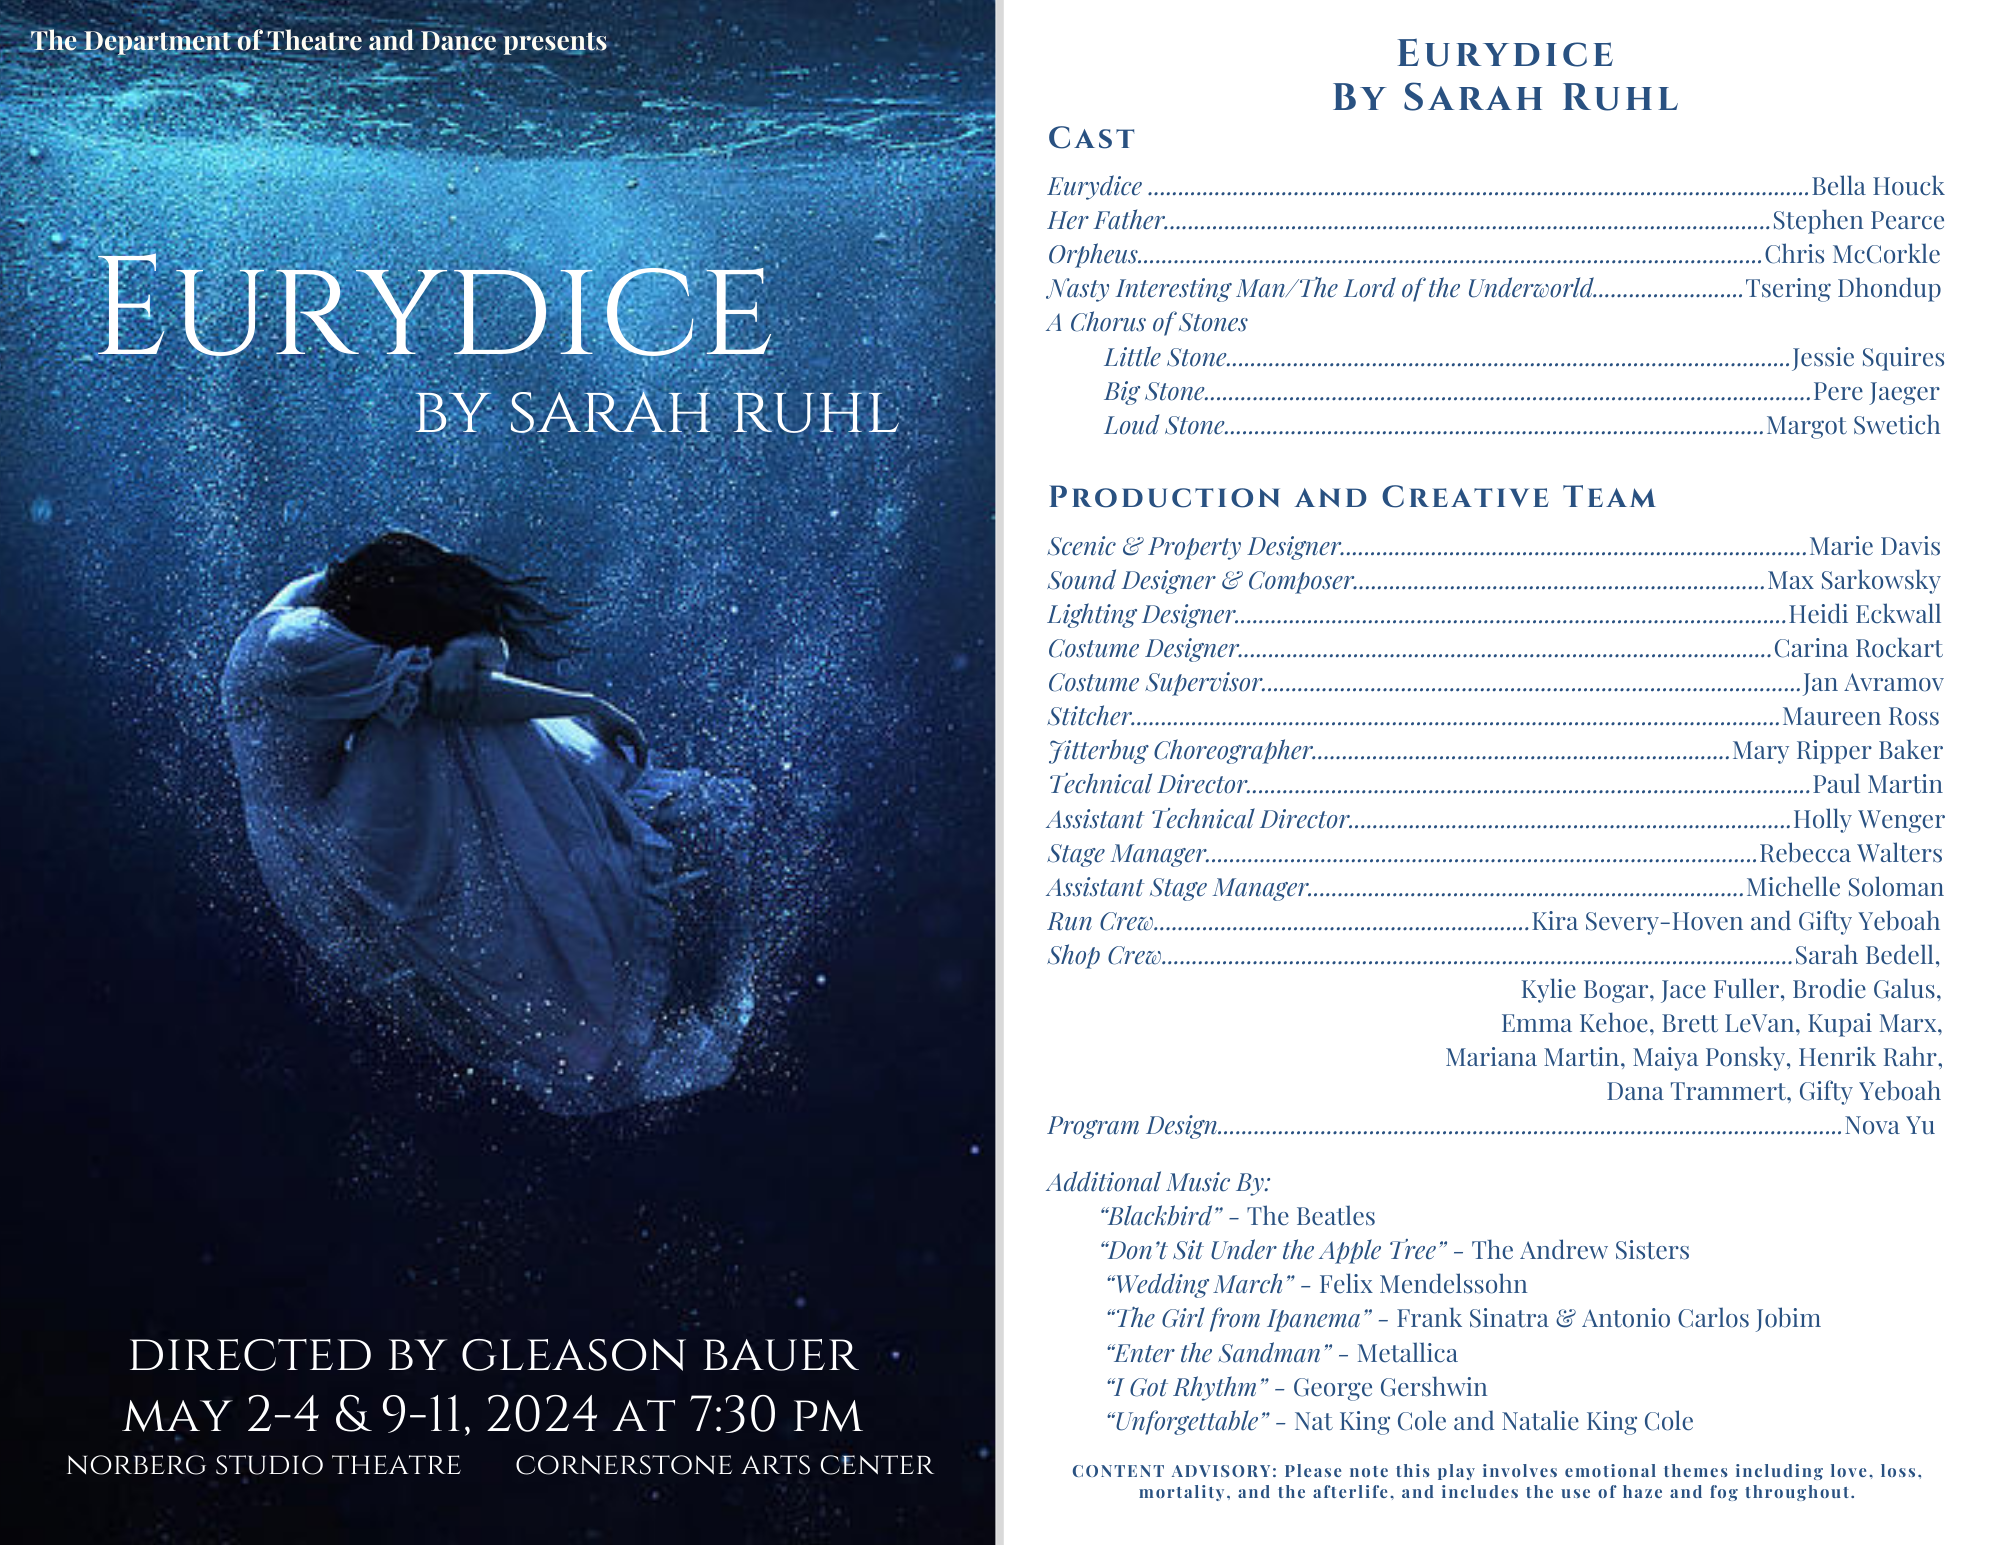 Eurydice Online Program